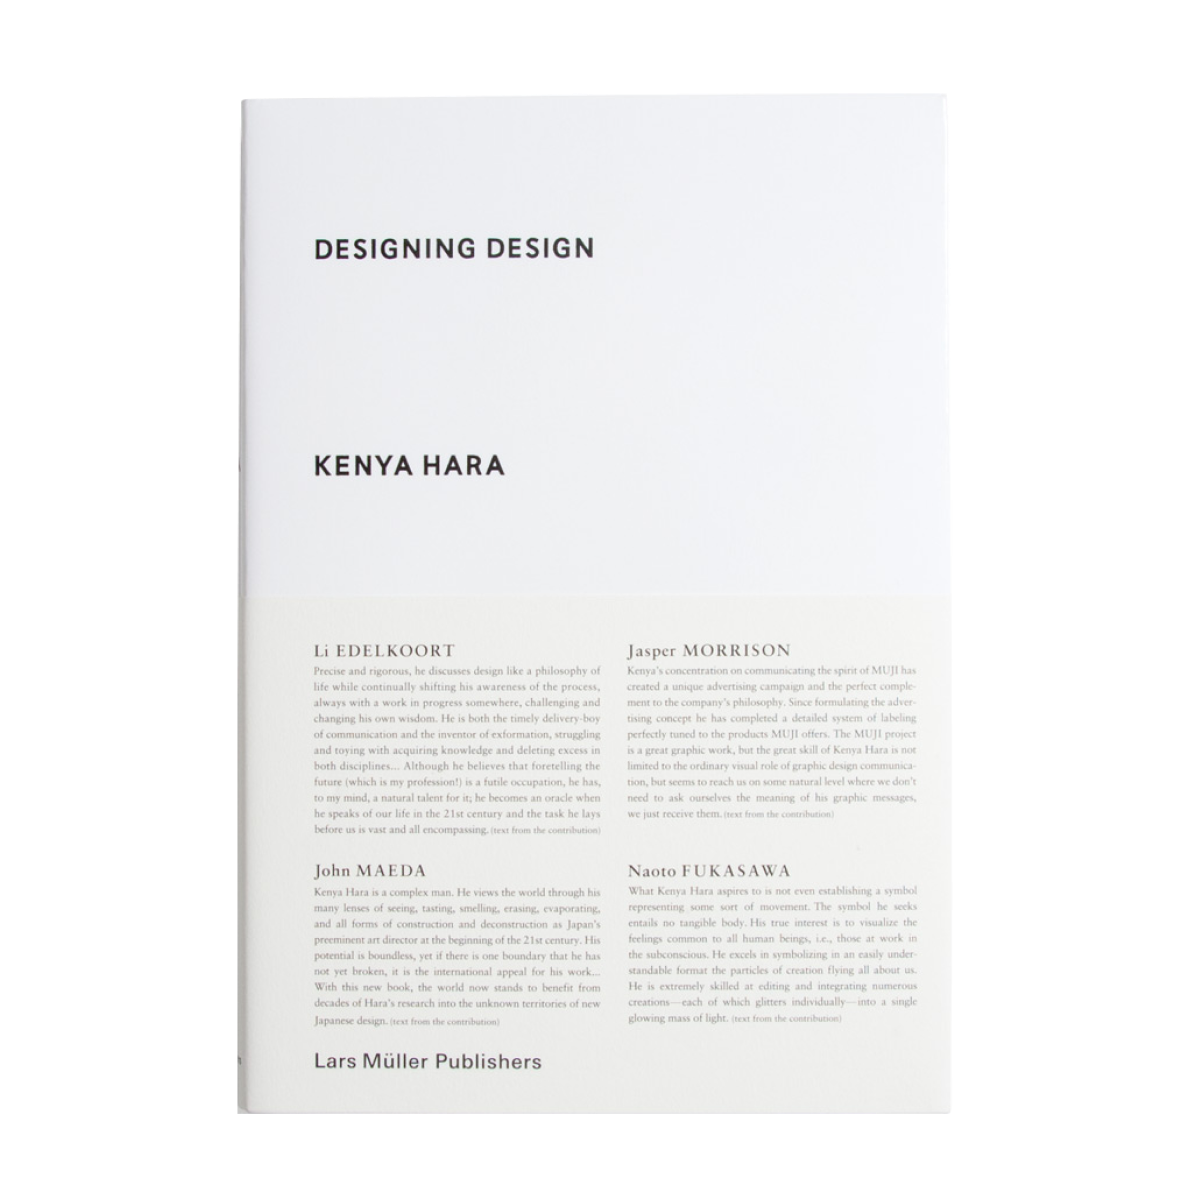 A book that talks design and minimalism by Kenya Hara